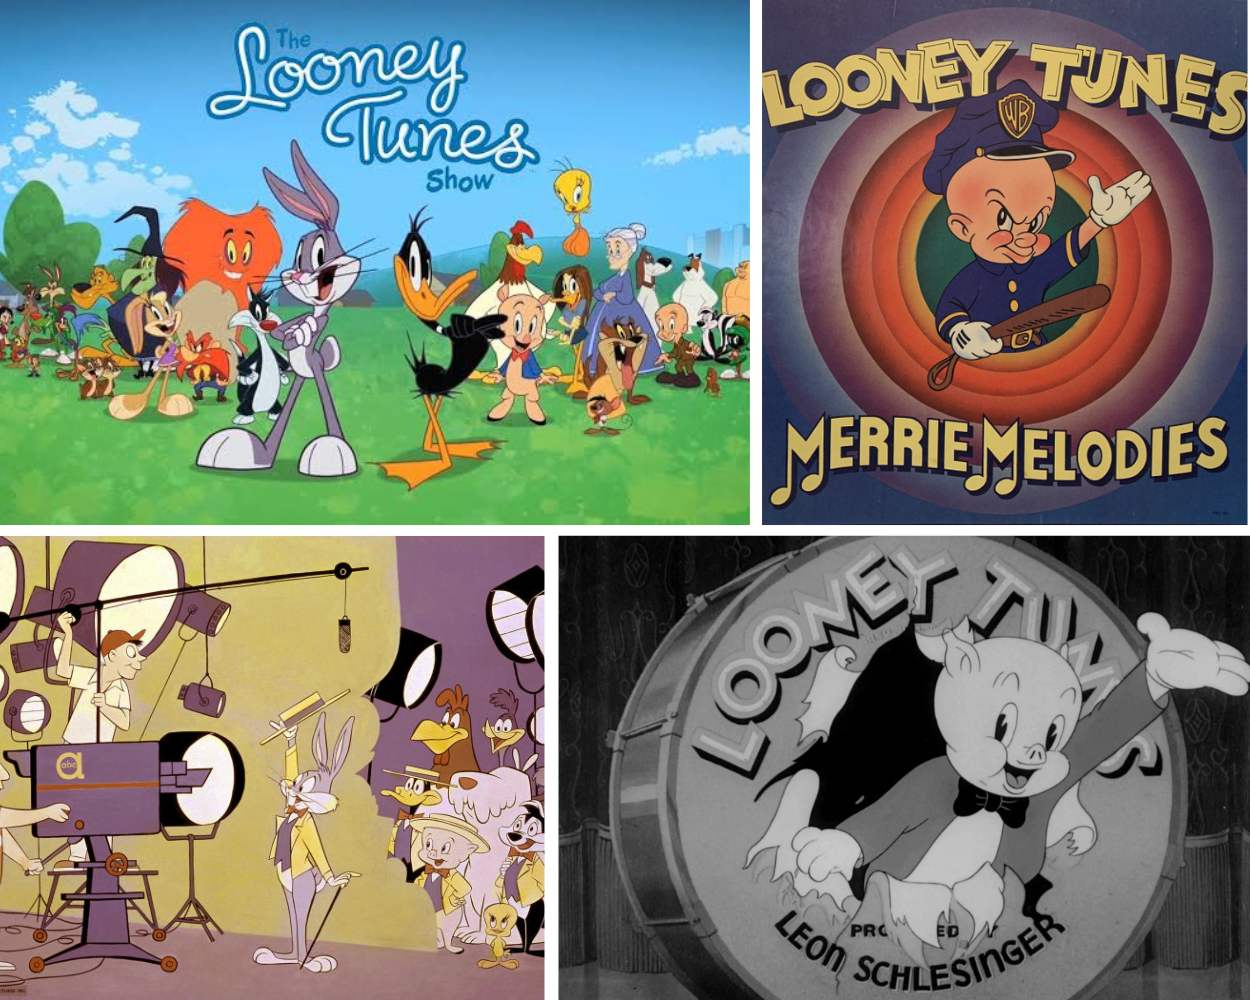 Looney Tunes - 70s cartoon